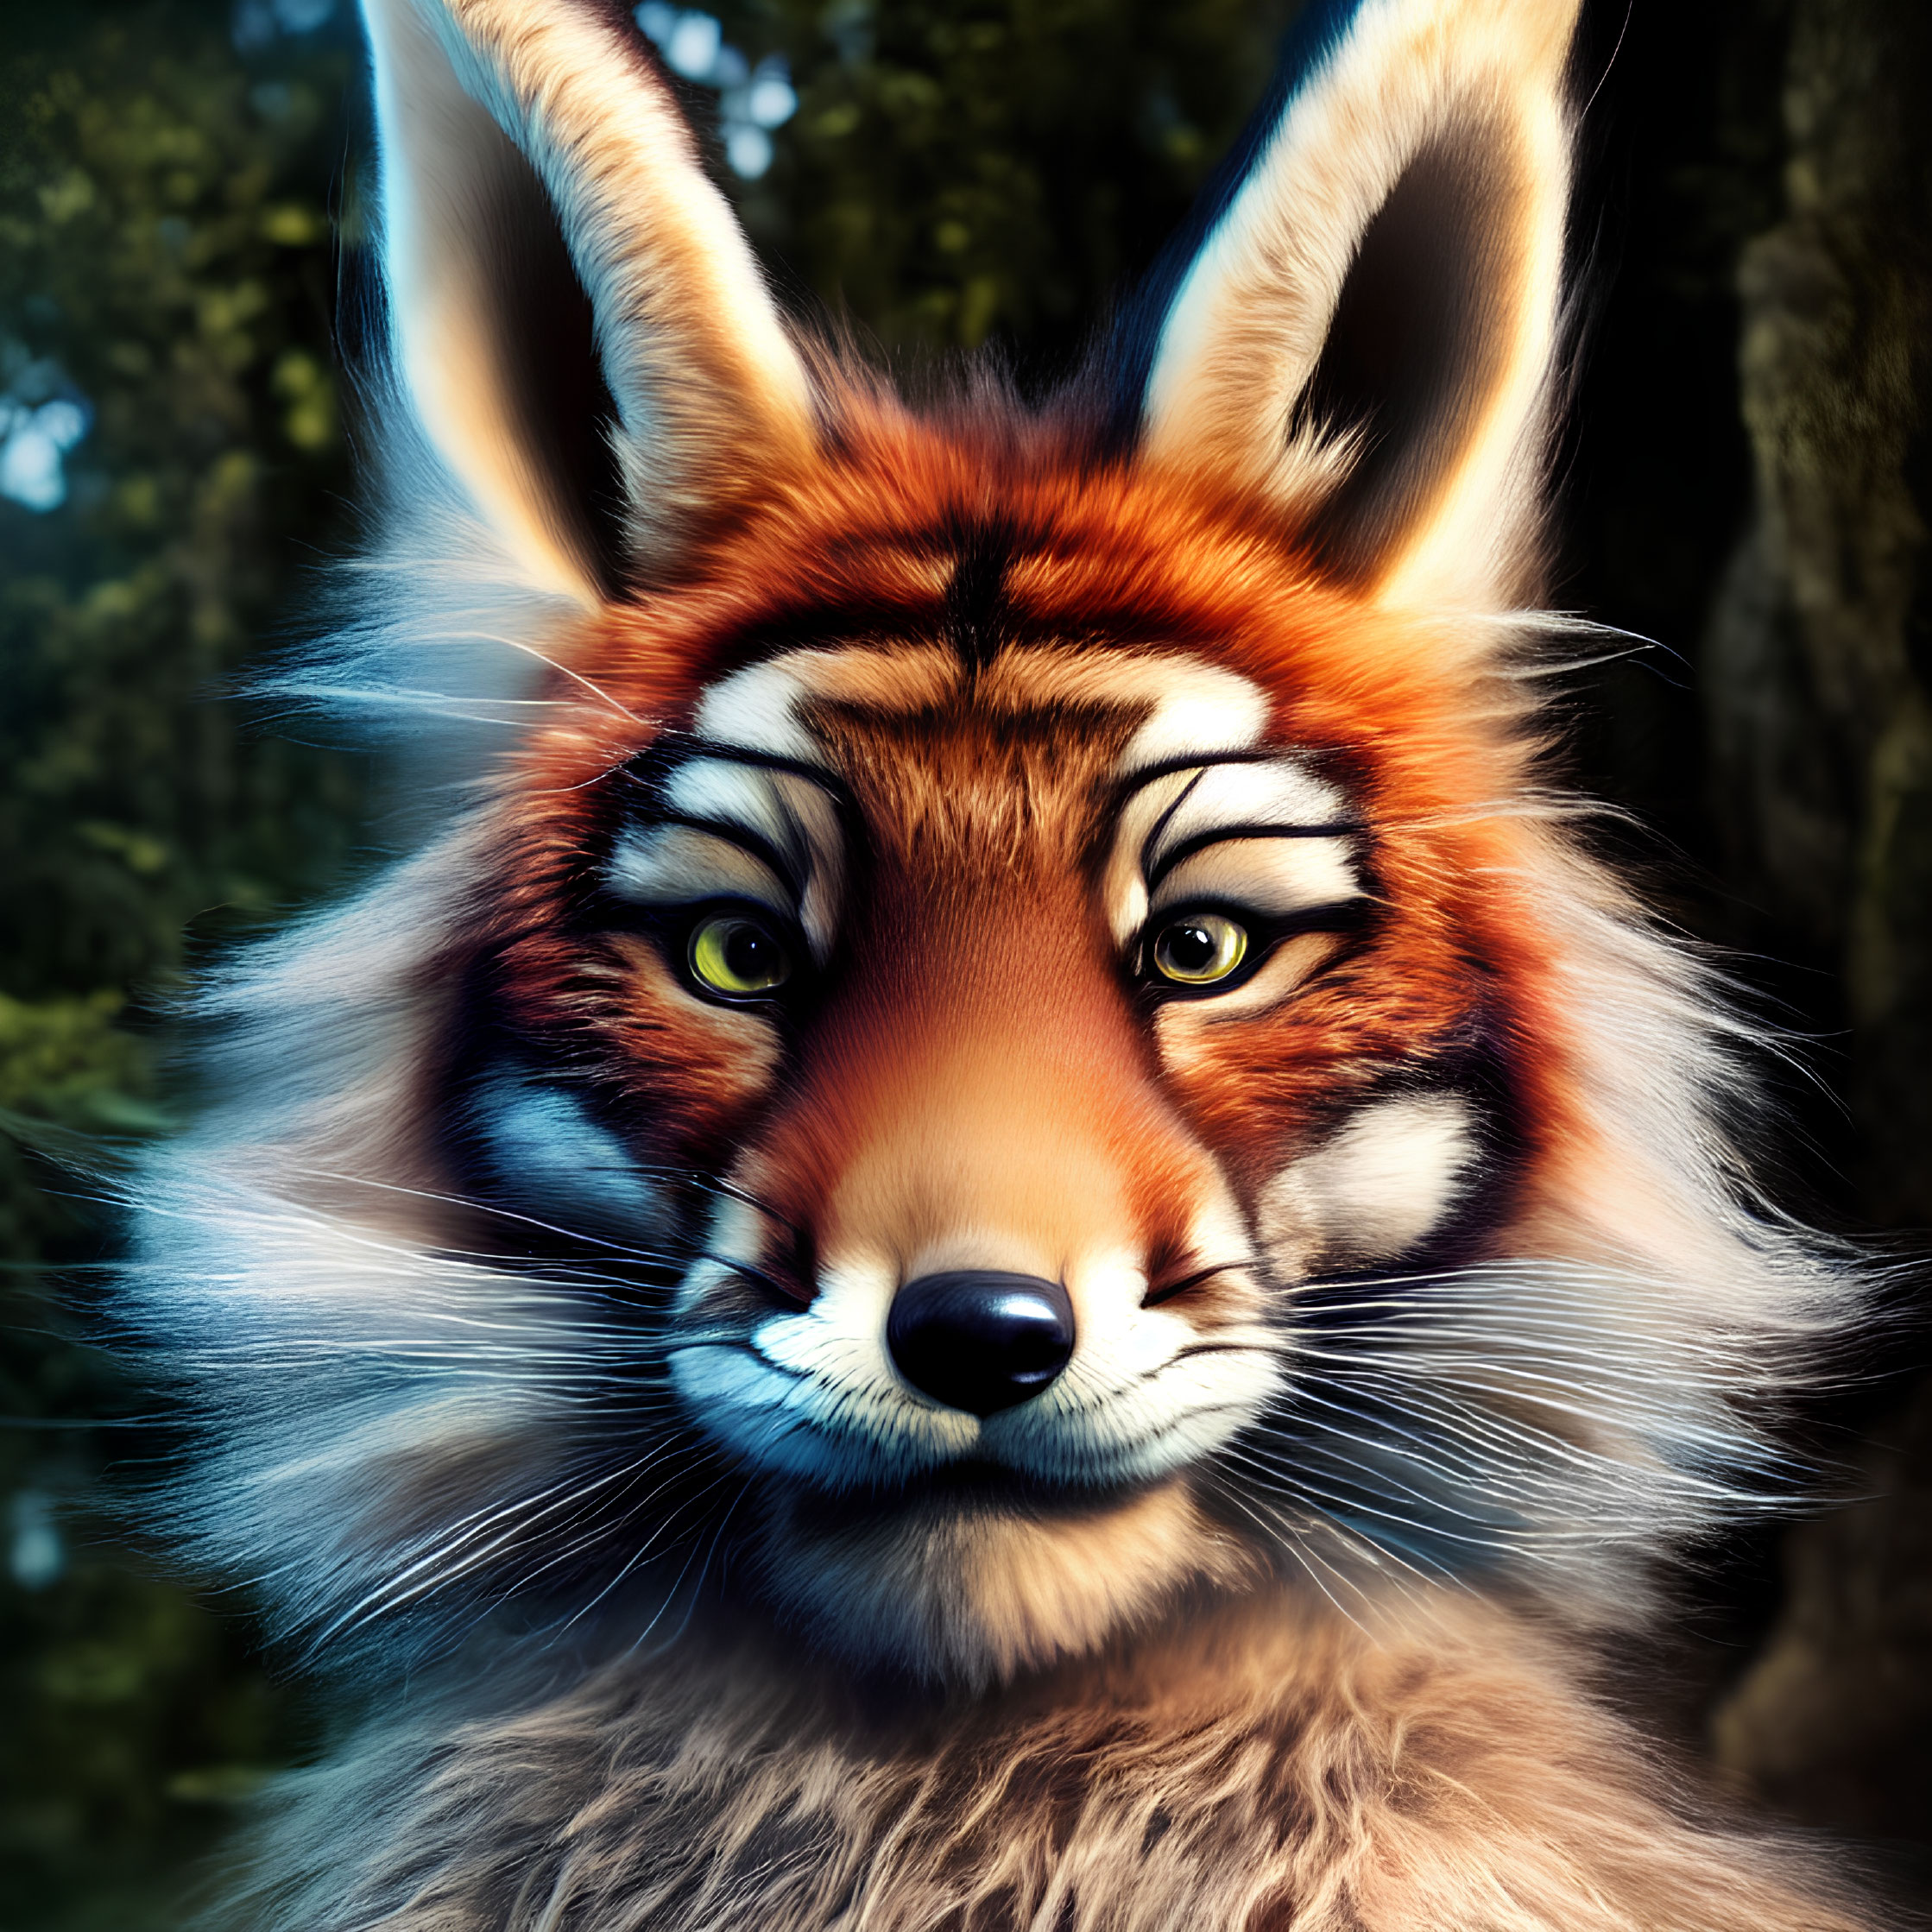 Anthropomorphic Fox-Tiger Hybrid Digital Art in Forest Setting